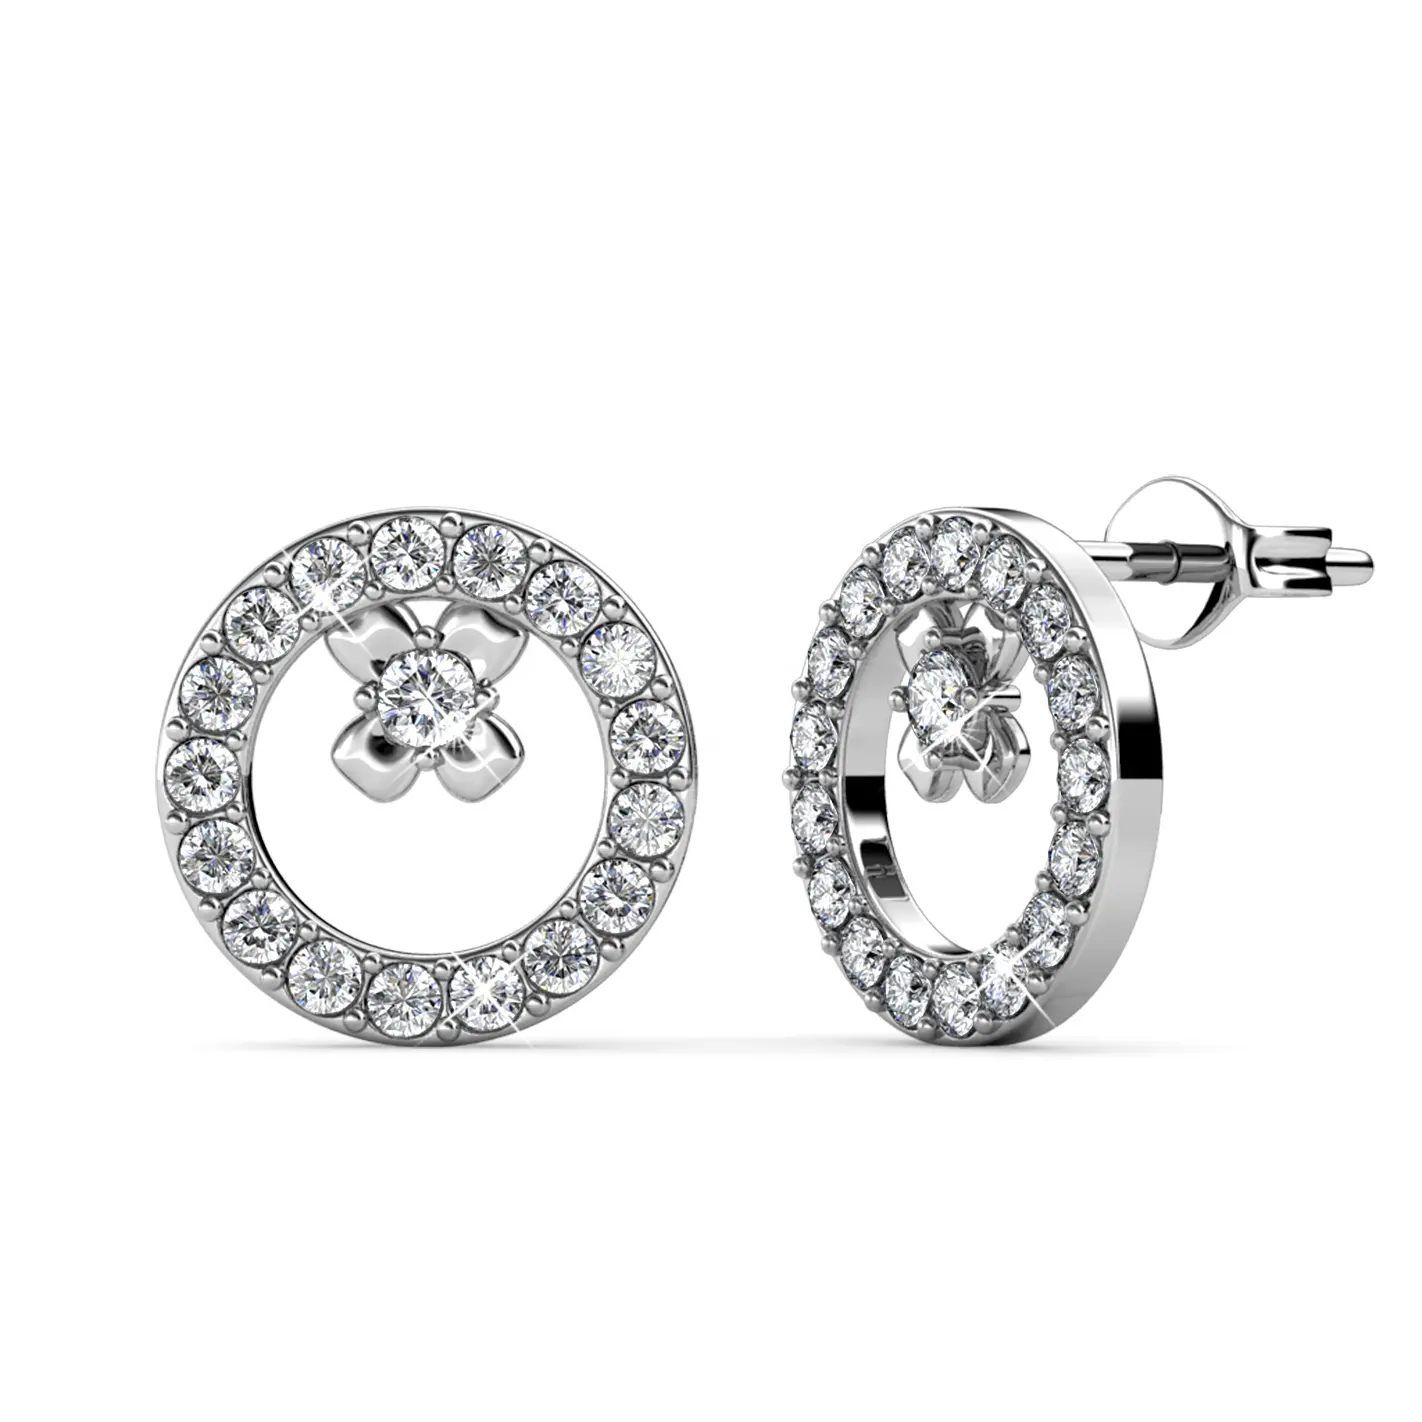 S925 Silver Premium Austrian Rhinestone Crystal Statement Women Jewelry Beautiful Design Round Stud Earrings Destiny Jewellery